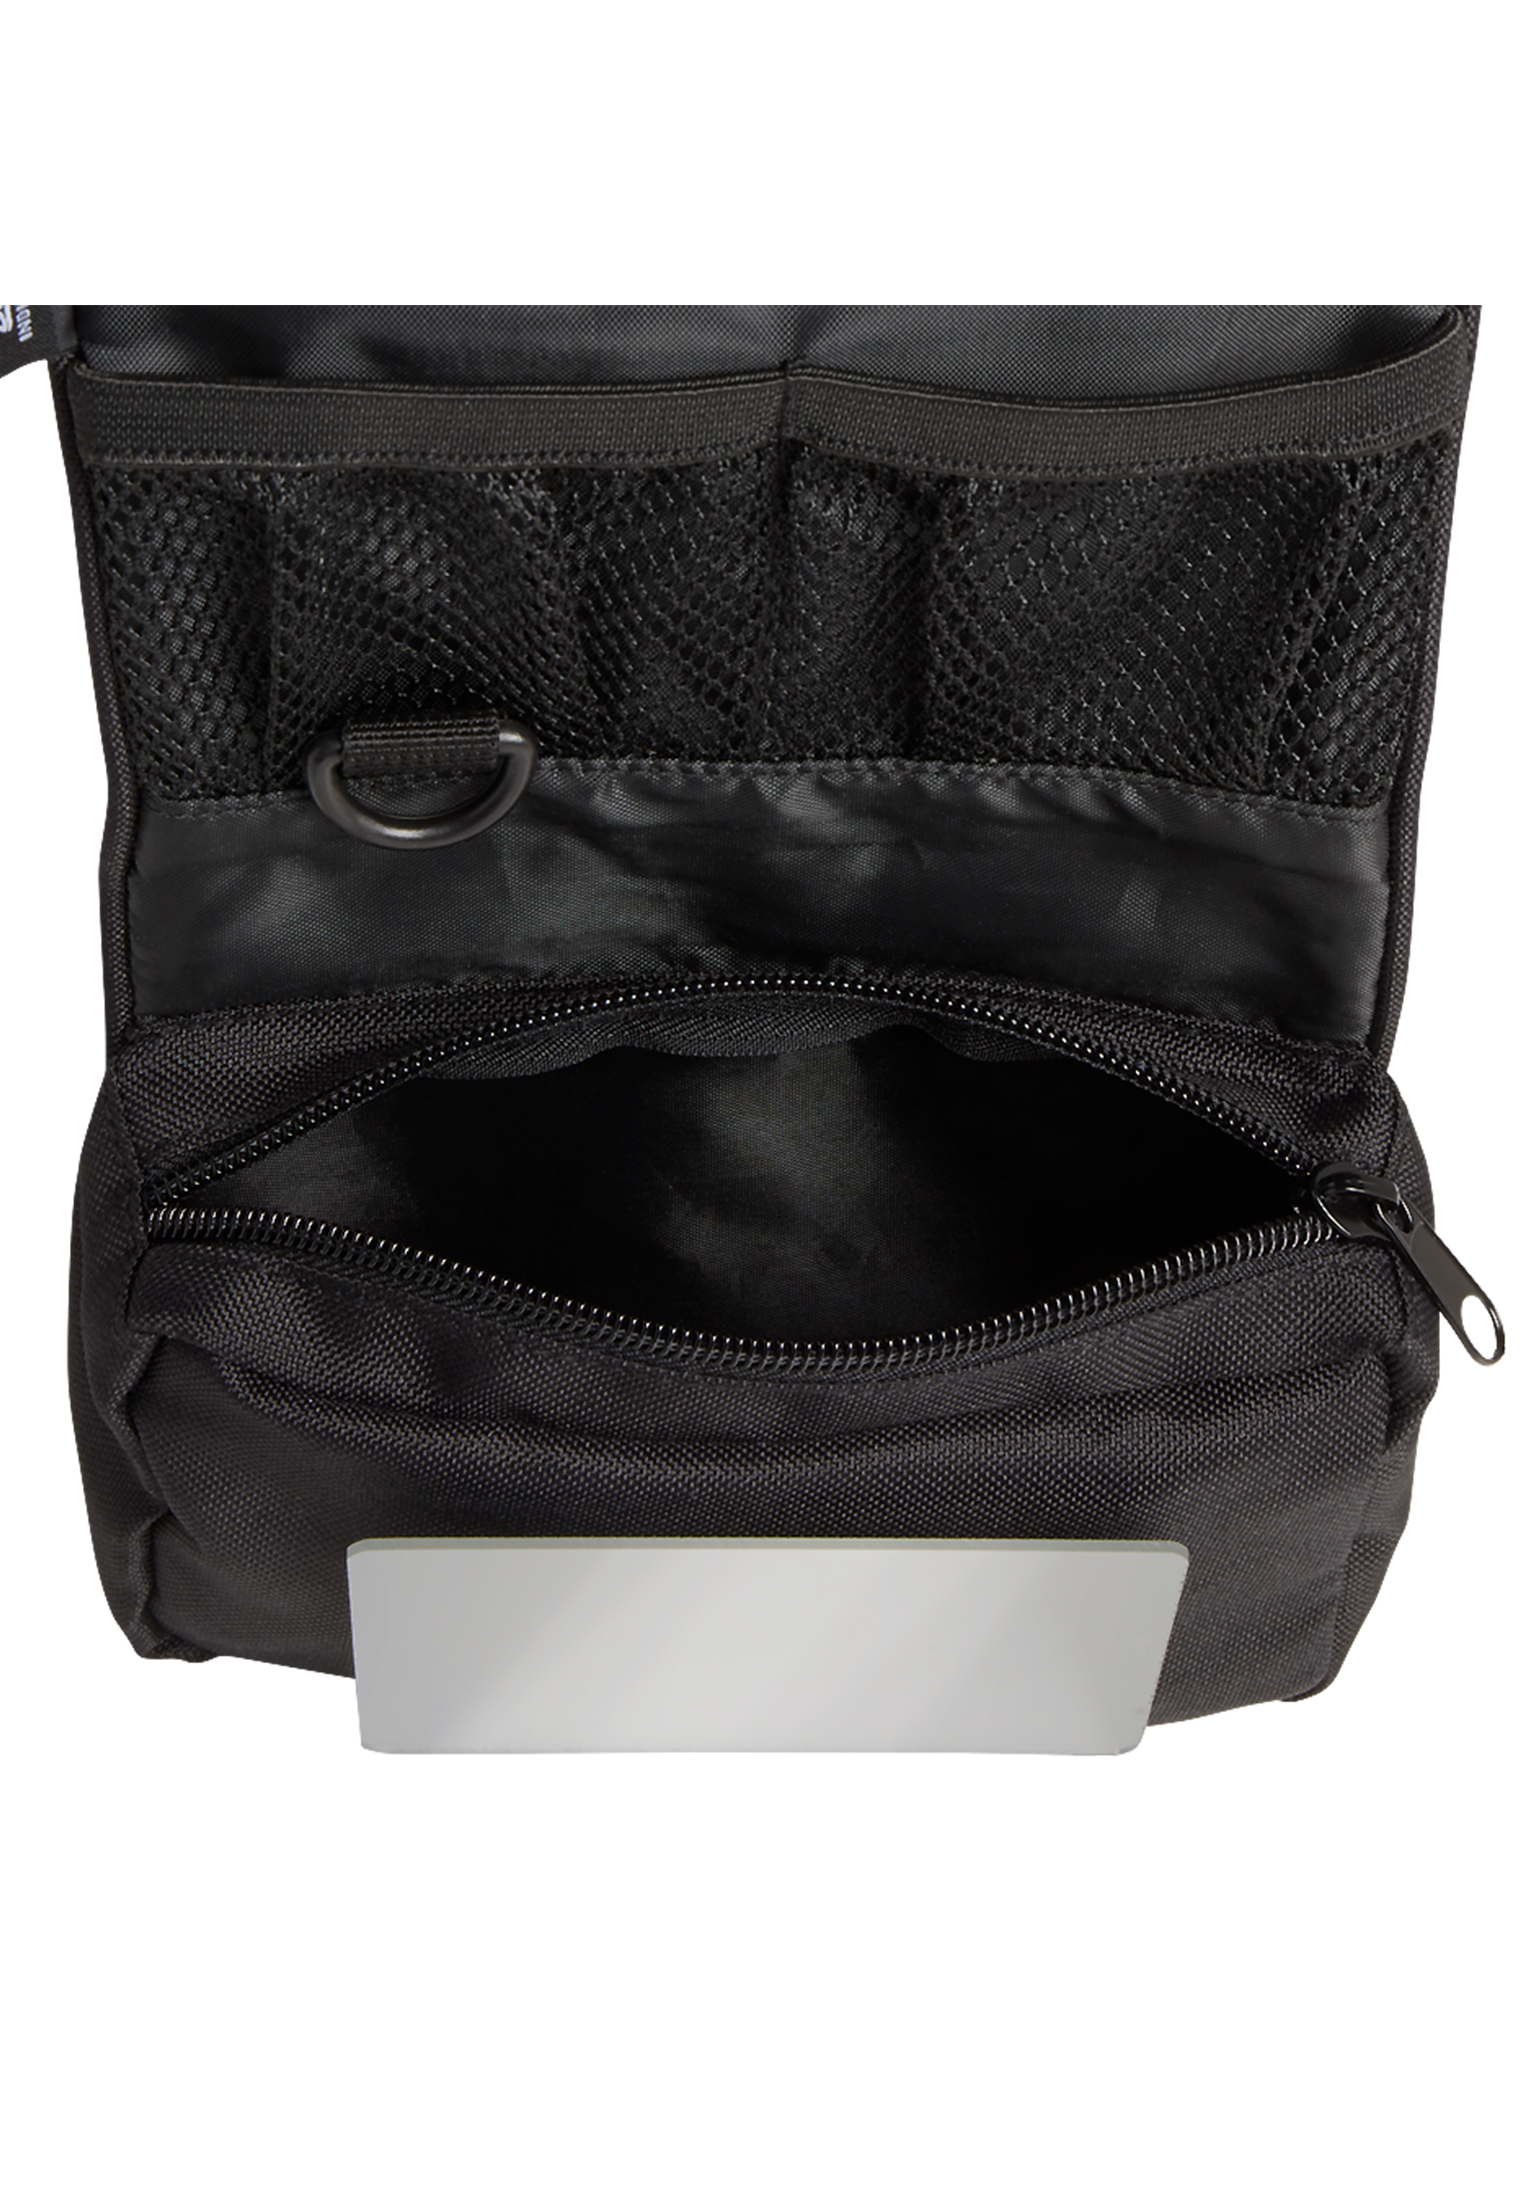 Taschen Toiletry Bag medium in Farbe black